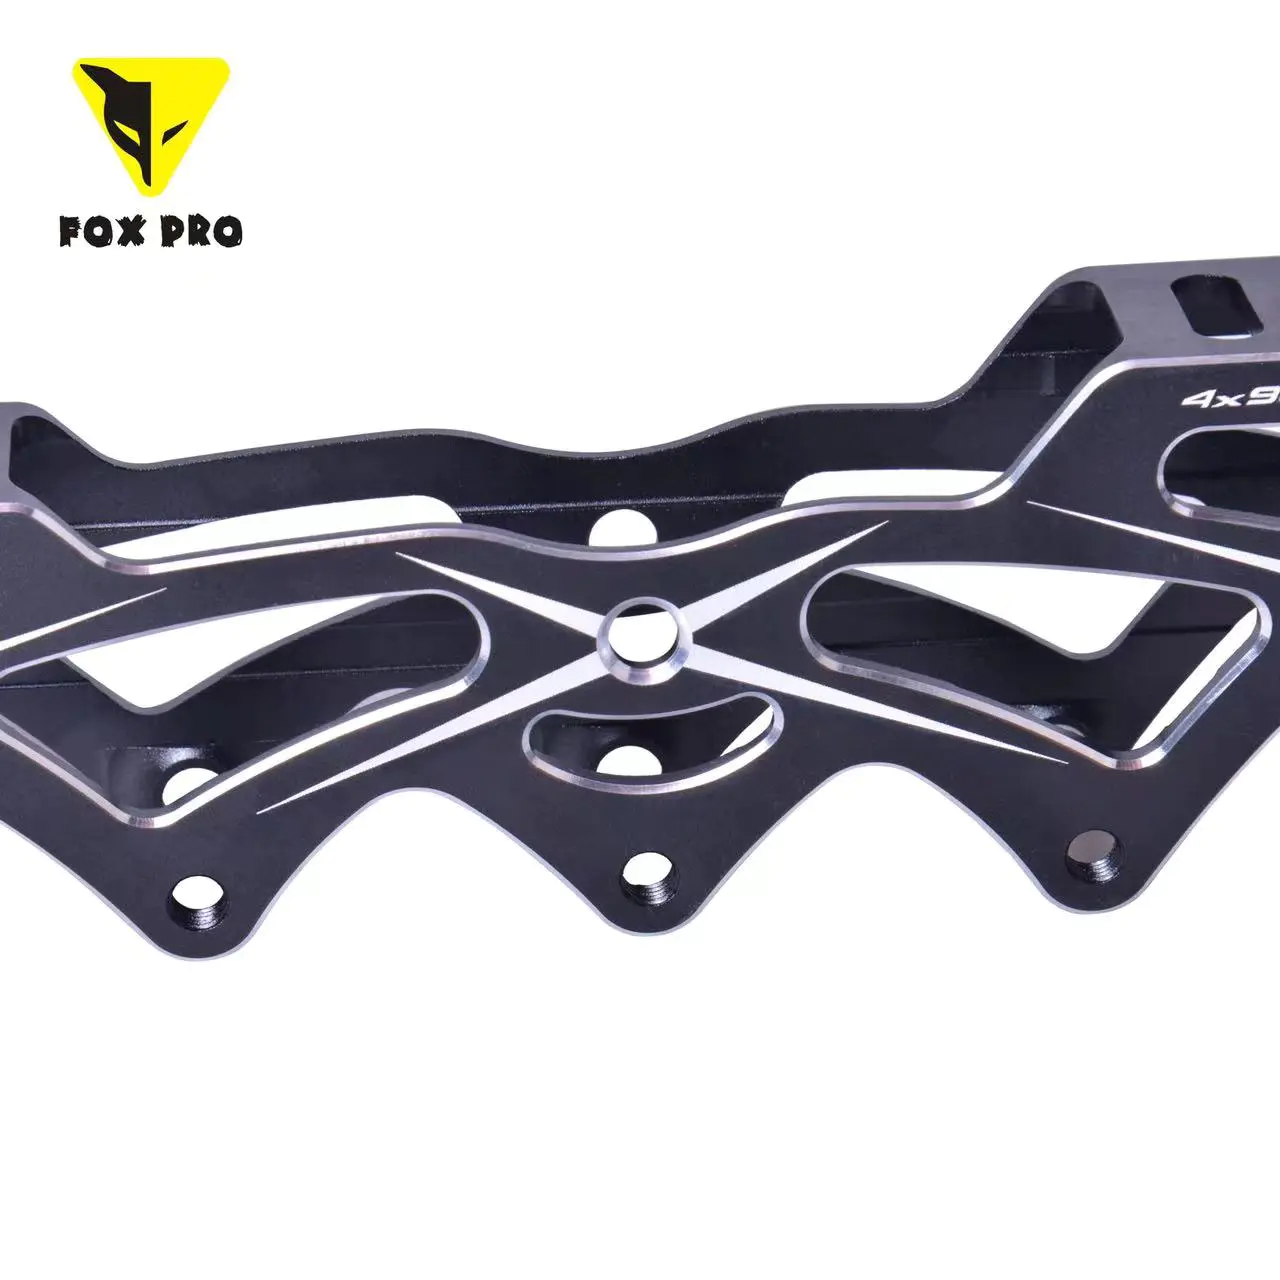 FOX PRO-WA Universal CNC Speed Inline Skates Aluminum Frame For 3 Wheels or 4 Wheel